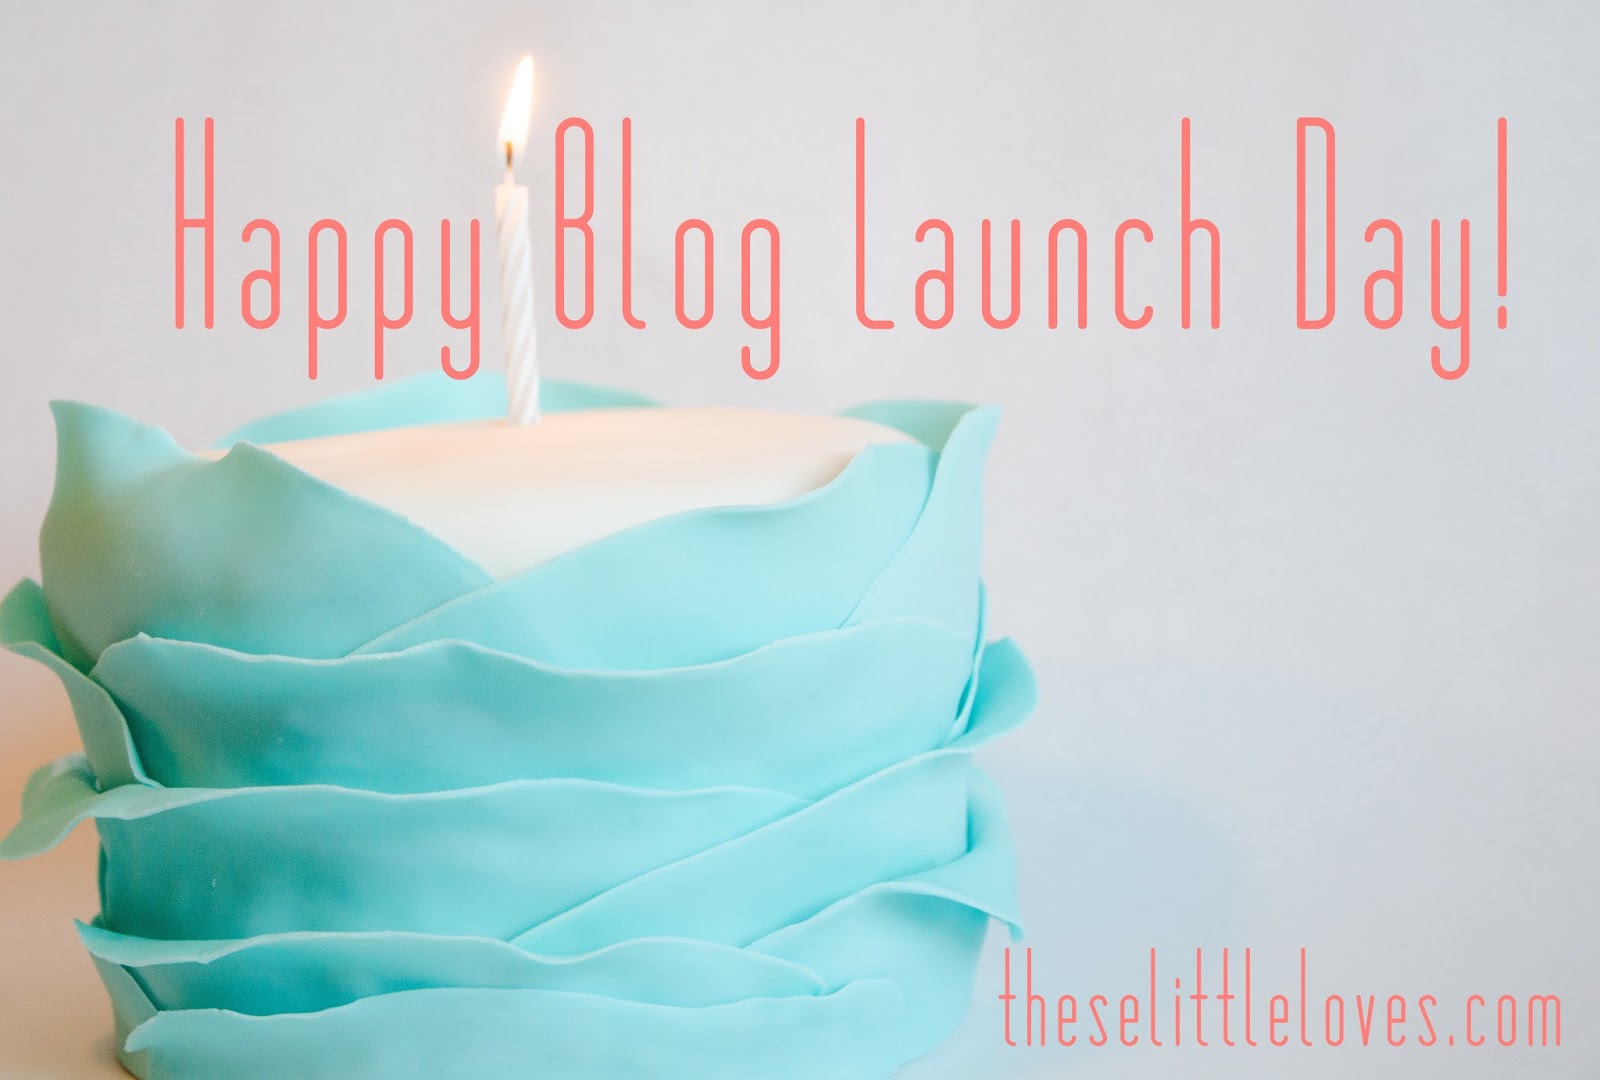 Happy Blog Launch Day!